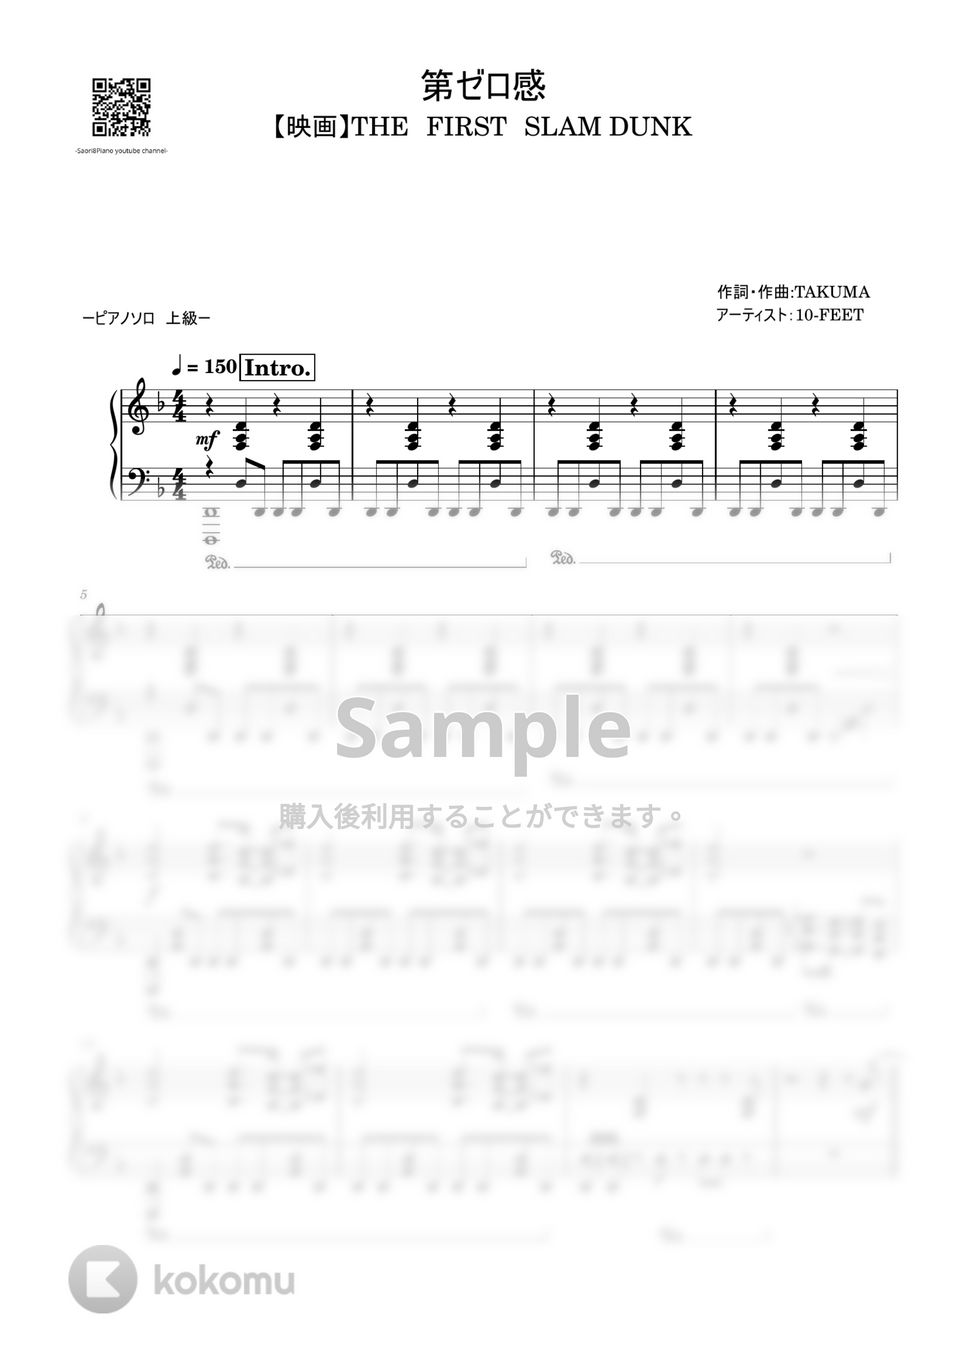 10-FEET - 第ゼロ感 (THE FIRST SLAM DUNK/上級レベル) by Saori8Piano